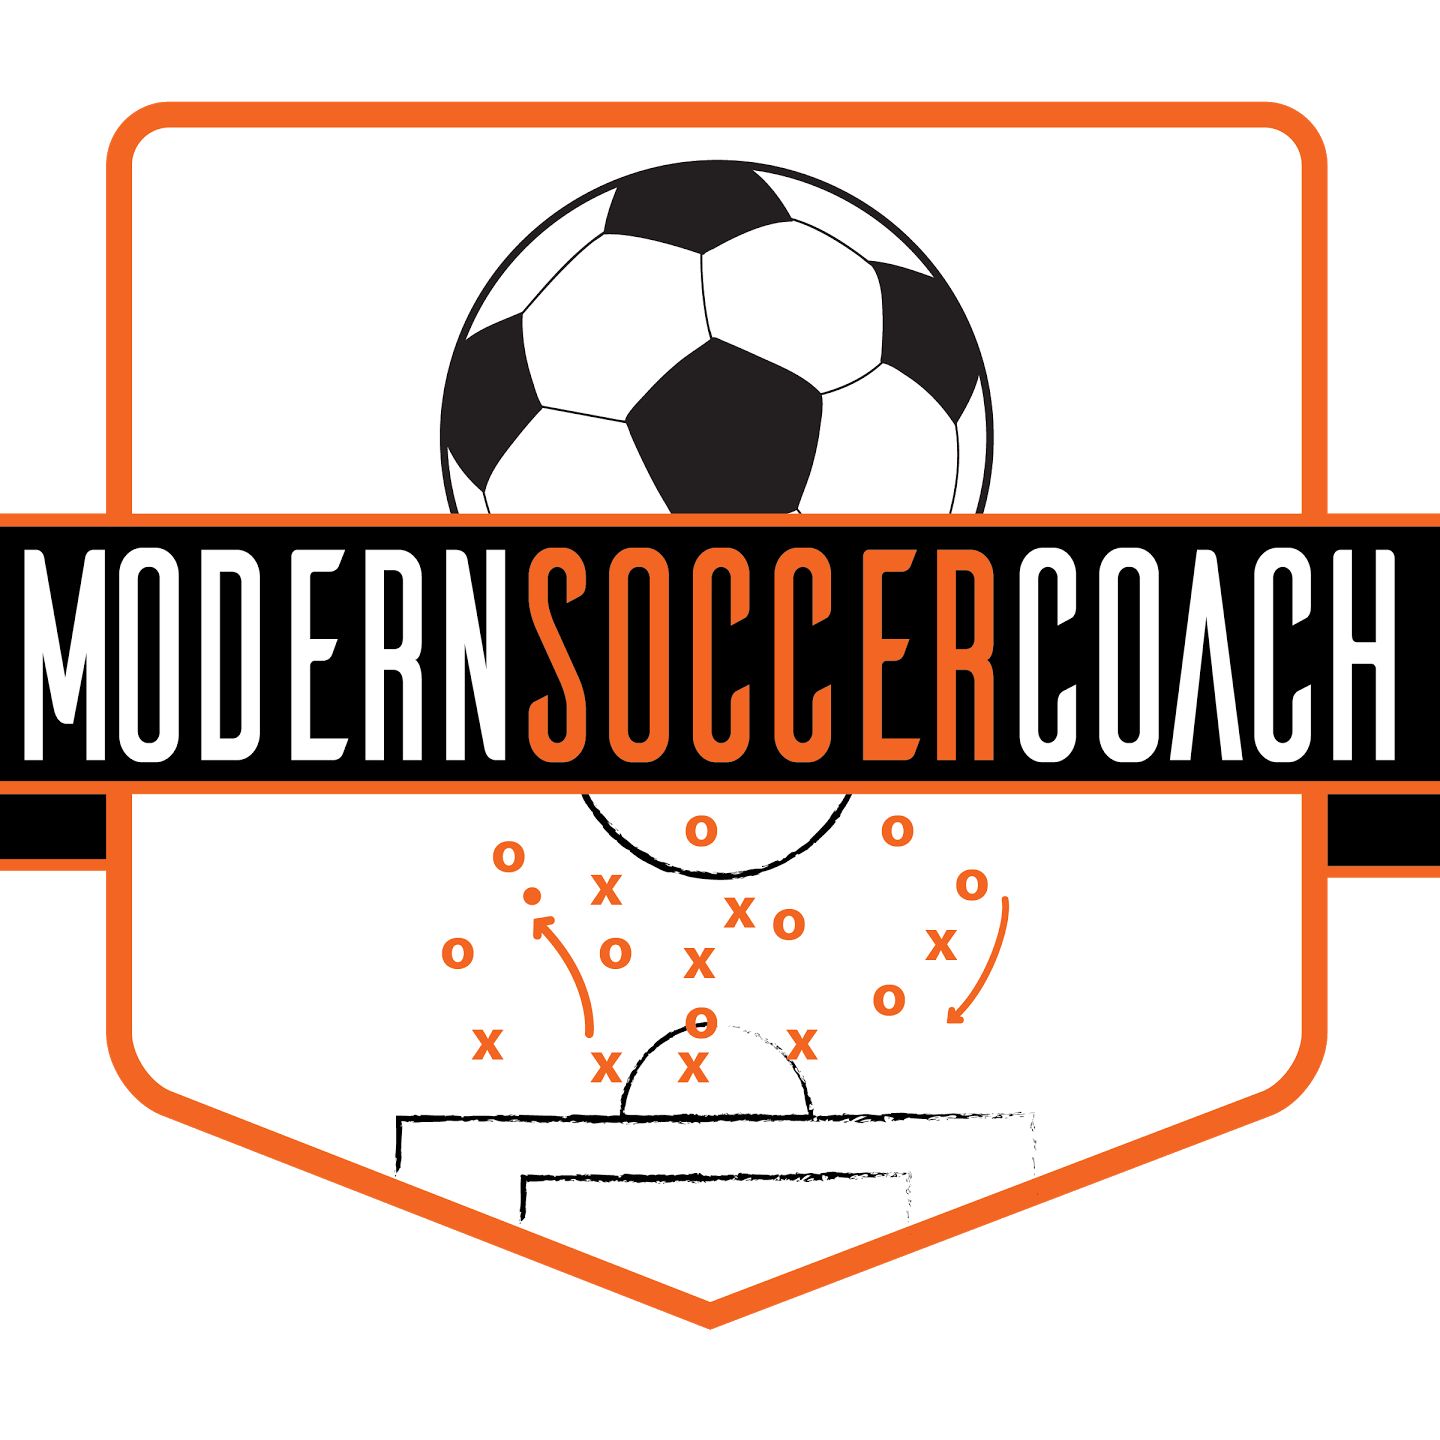 Modern Soccer Coach Podcast